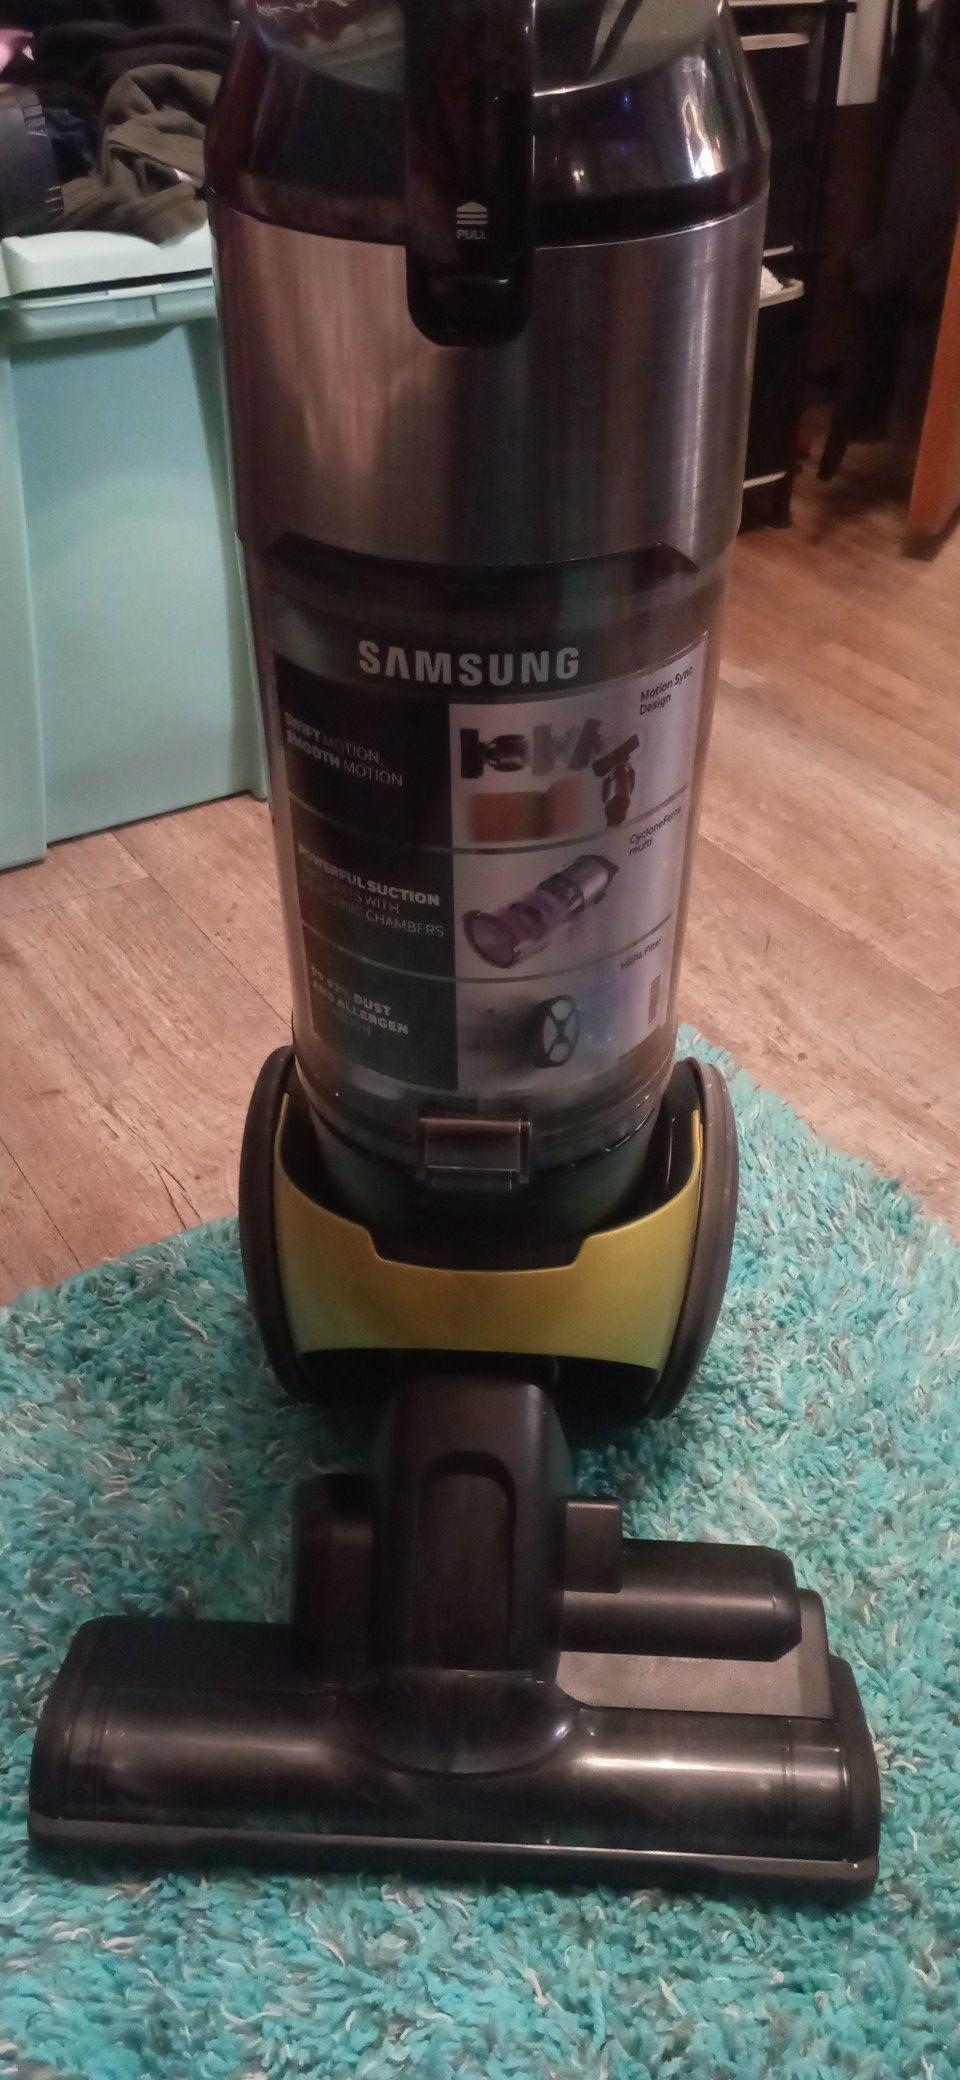 Samsung cyclone force vacuum